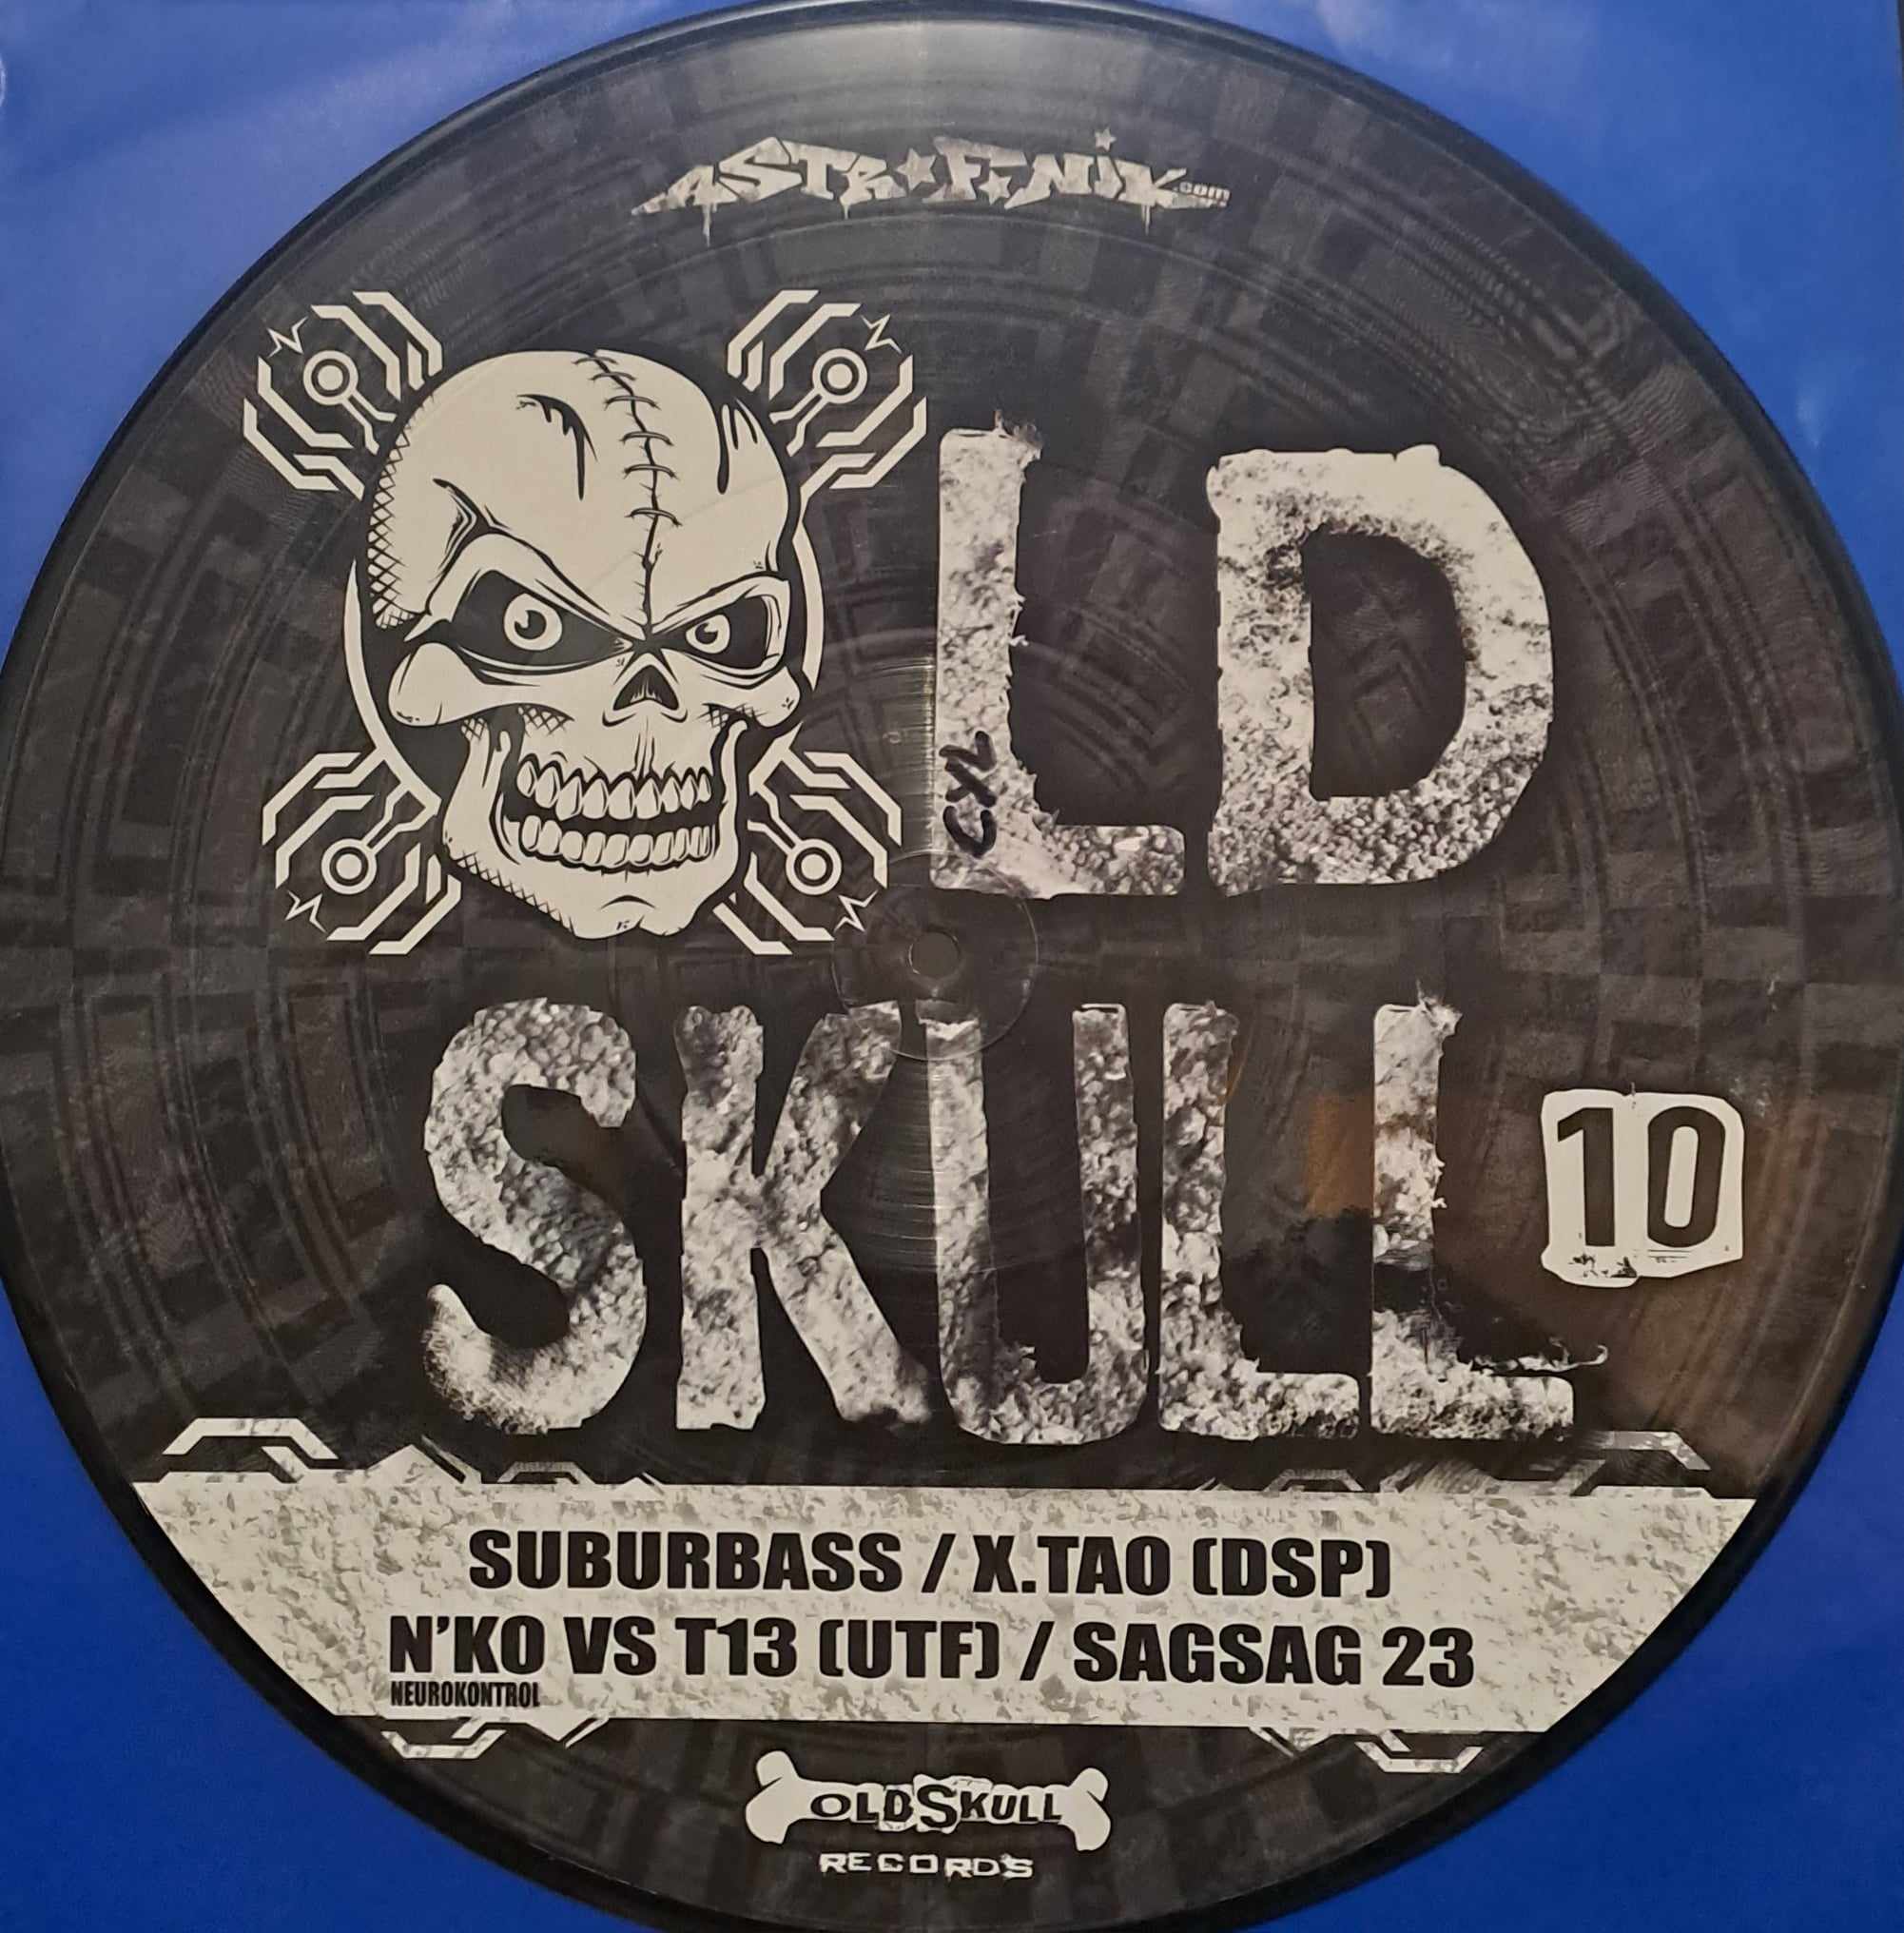 Old Skull 10 (picture) - vinyle freetekno